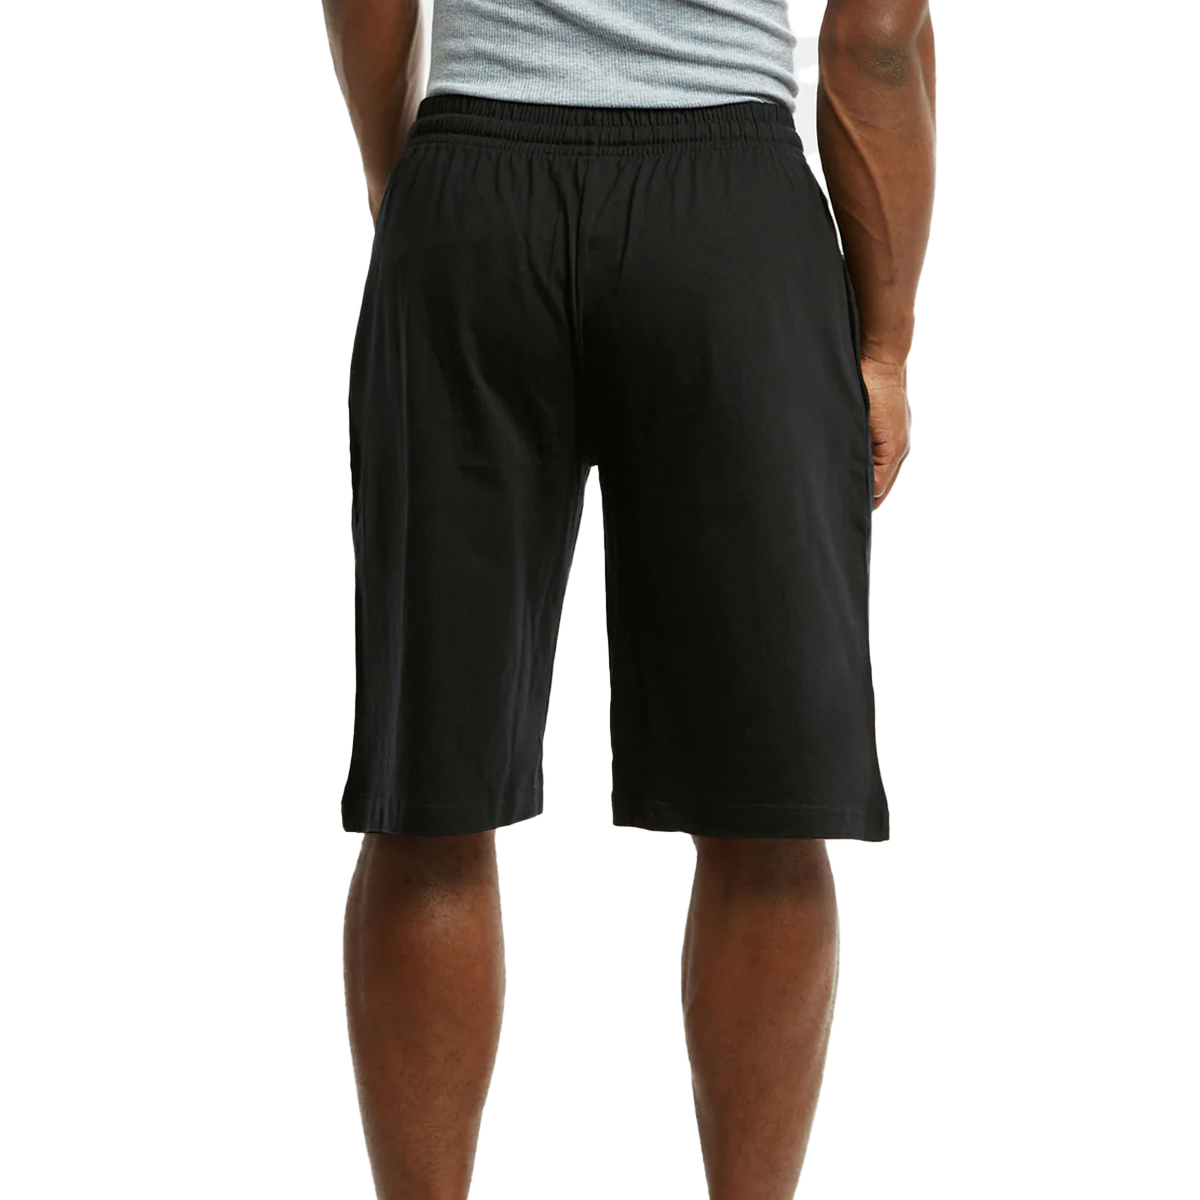 Men's Fleece Pajama Pants - 3X-5X, Black/Red Plaid